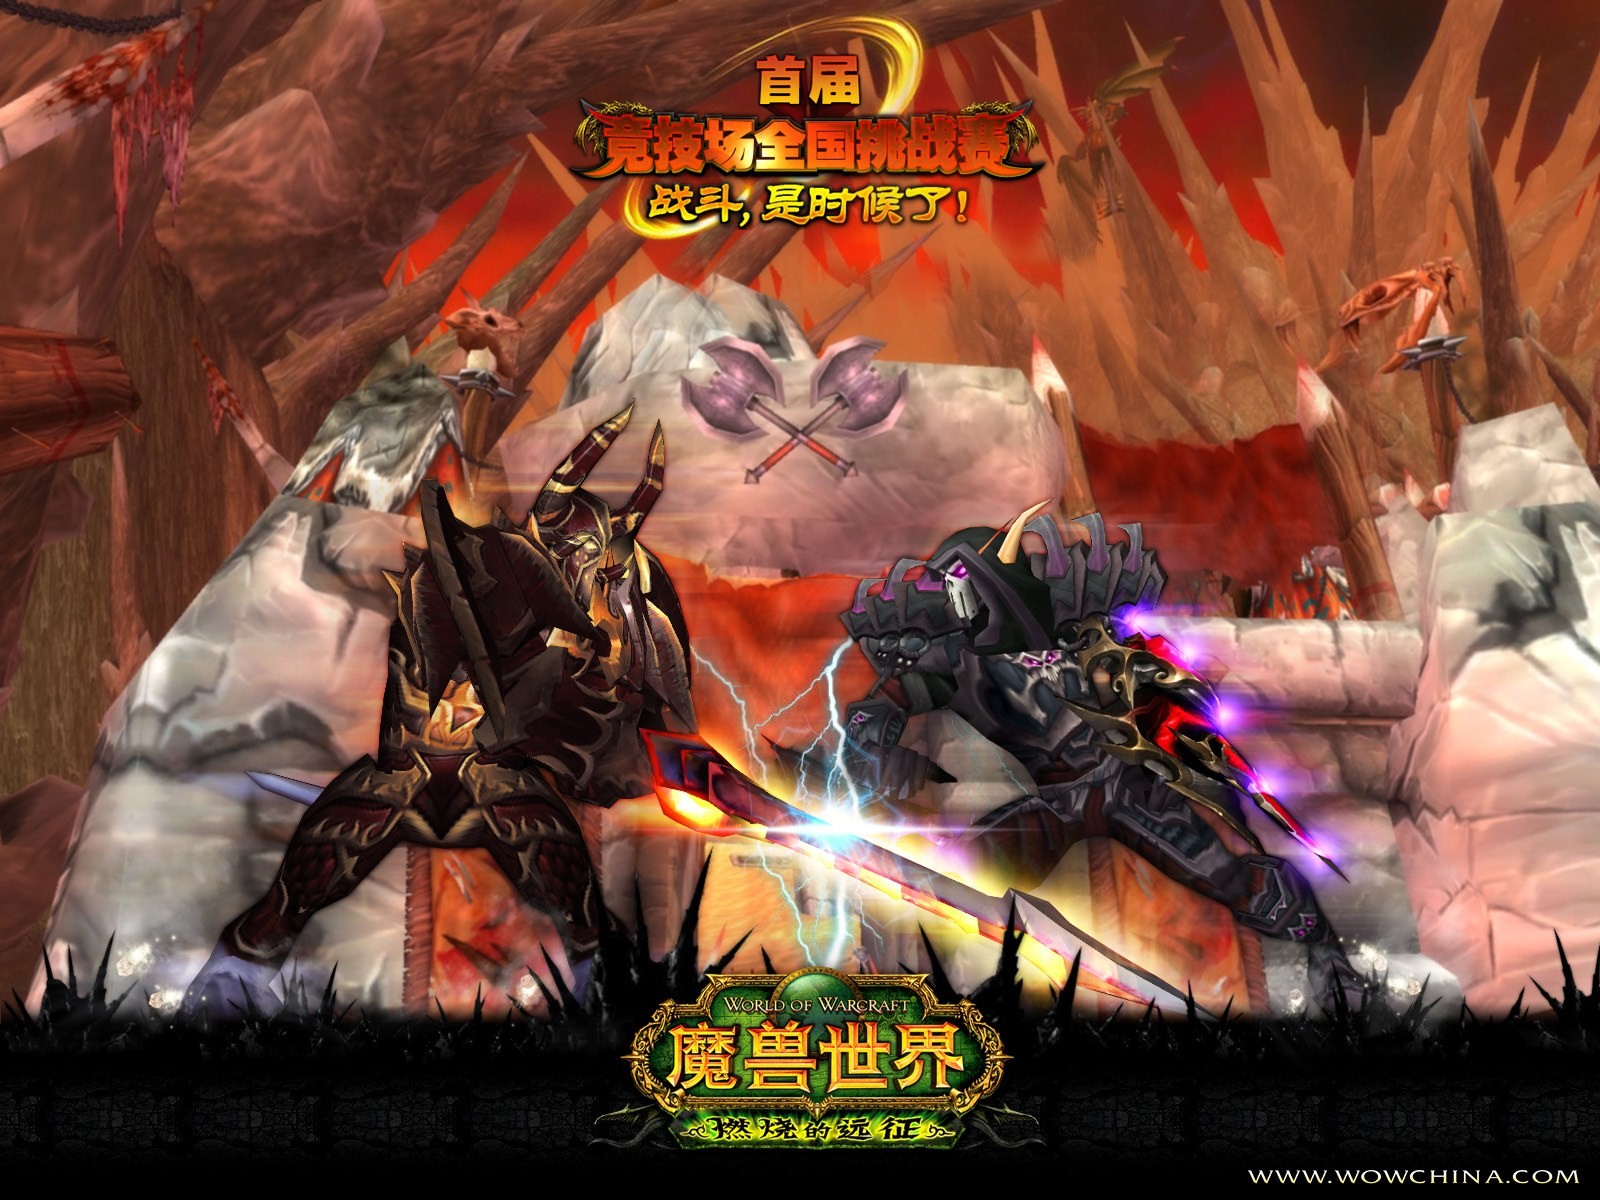 World of Warcraft: fondo de pantalla oficial de The Burning Crusade (2) #5 - 1600x1200